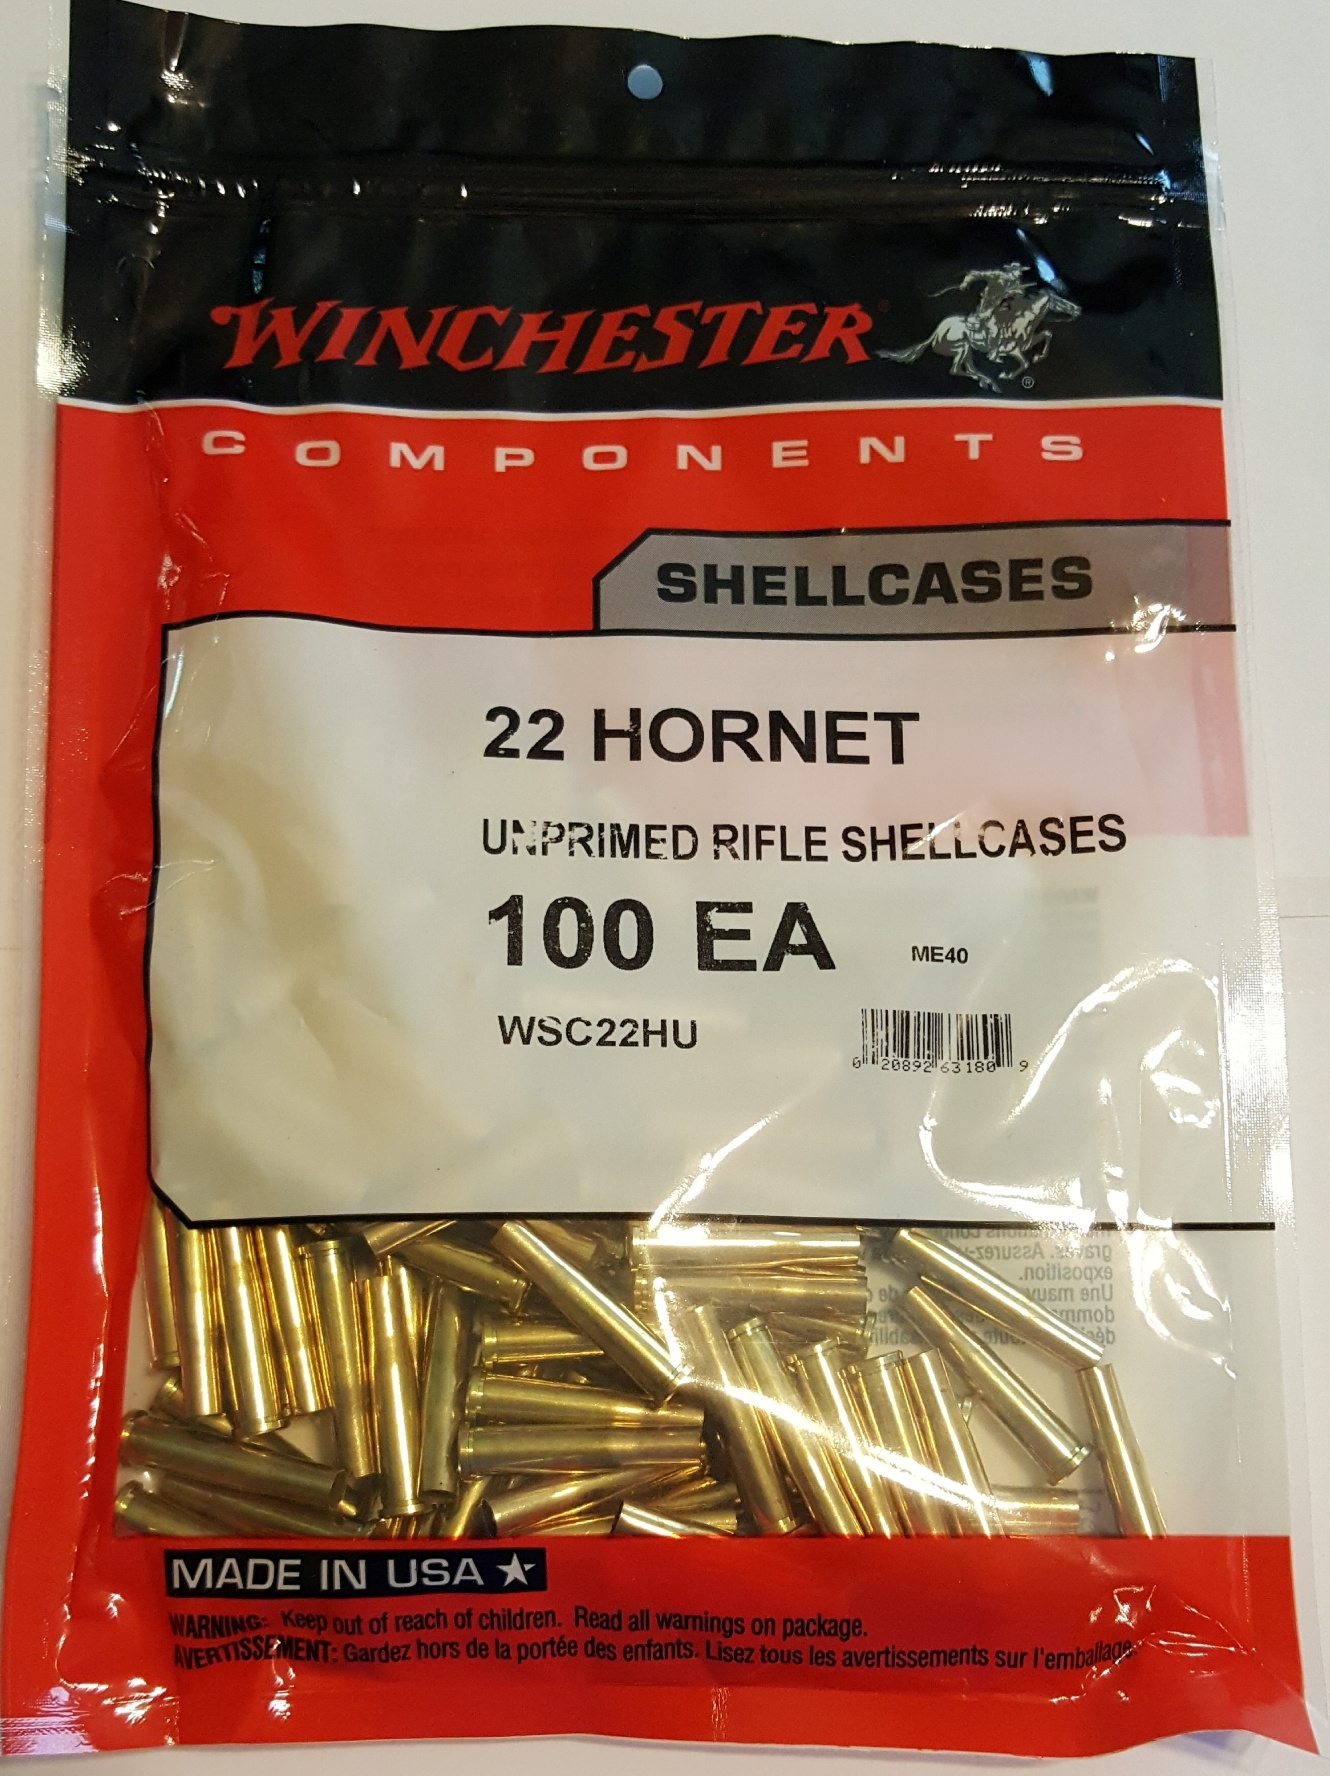 22 Hornet Brass